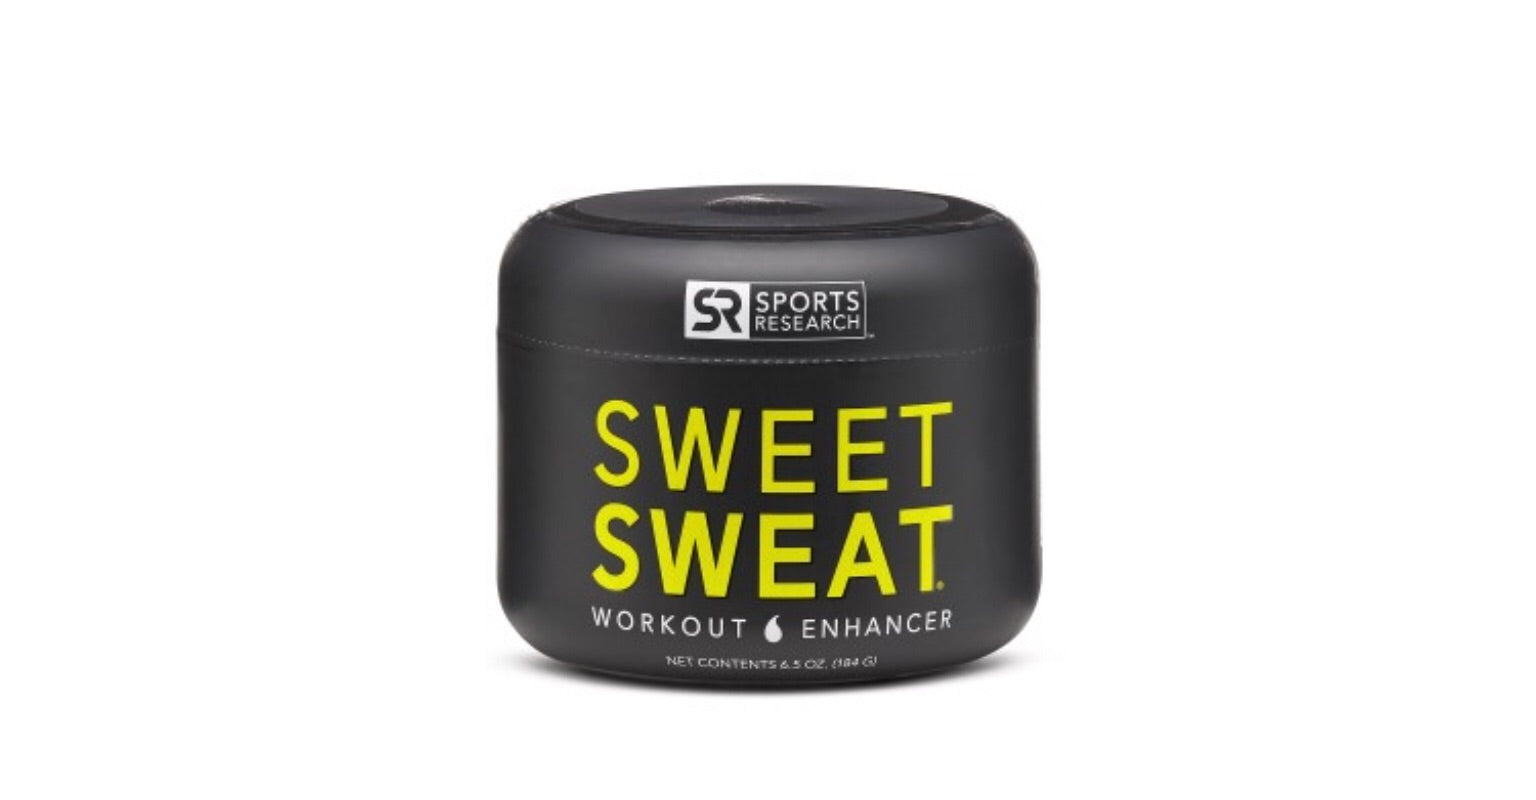 SportsResearch Sweat Workout Enhancer, 6.5 Oz